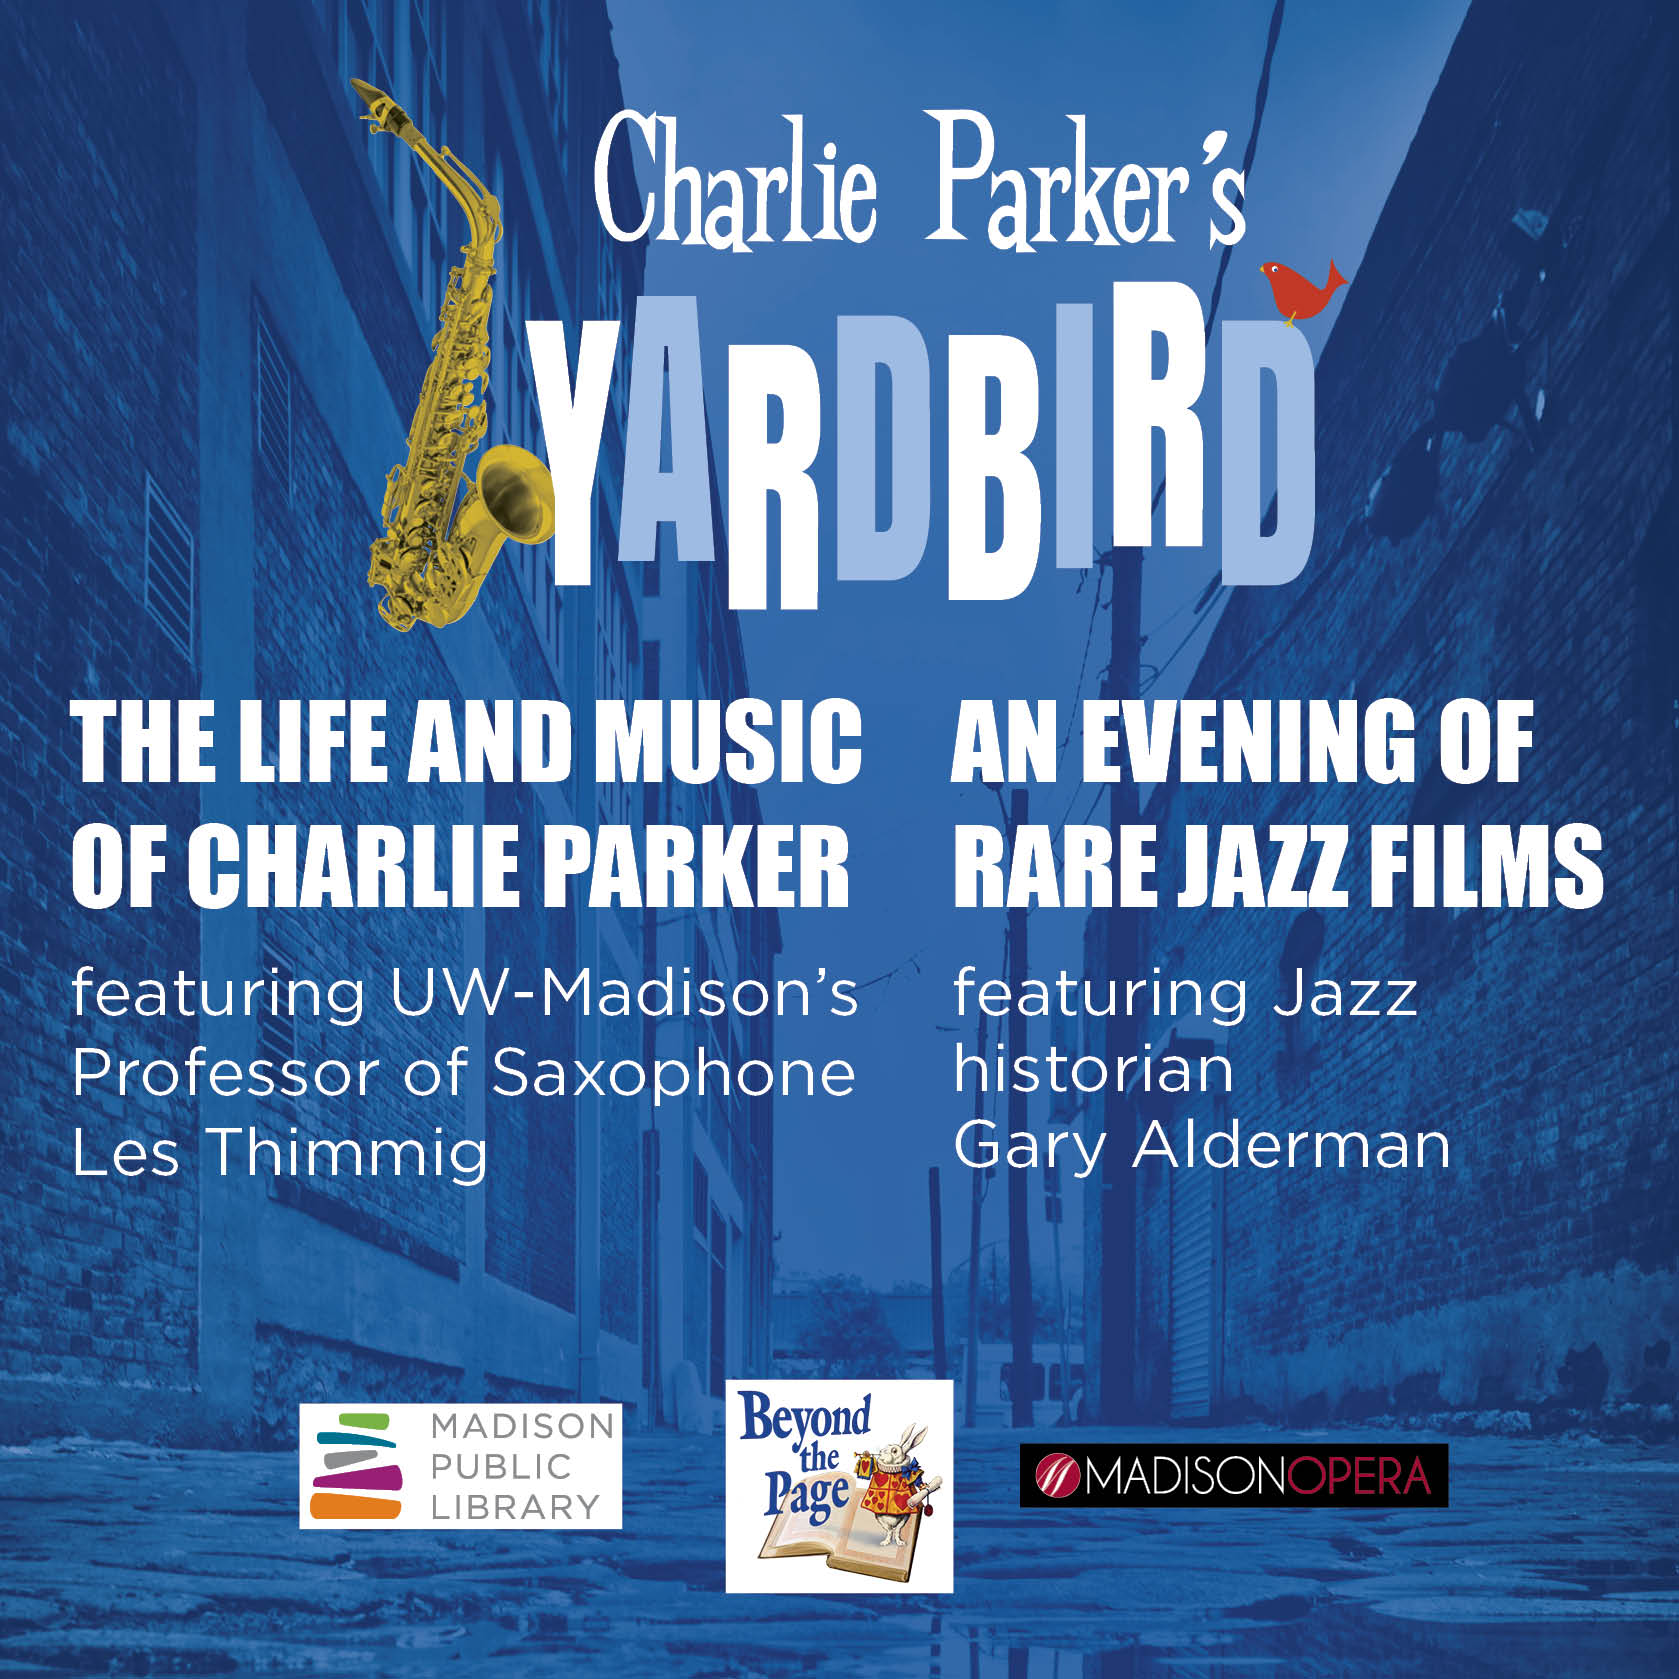 Charlie Parker's Yardbird